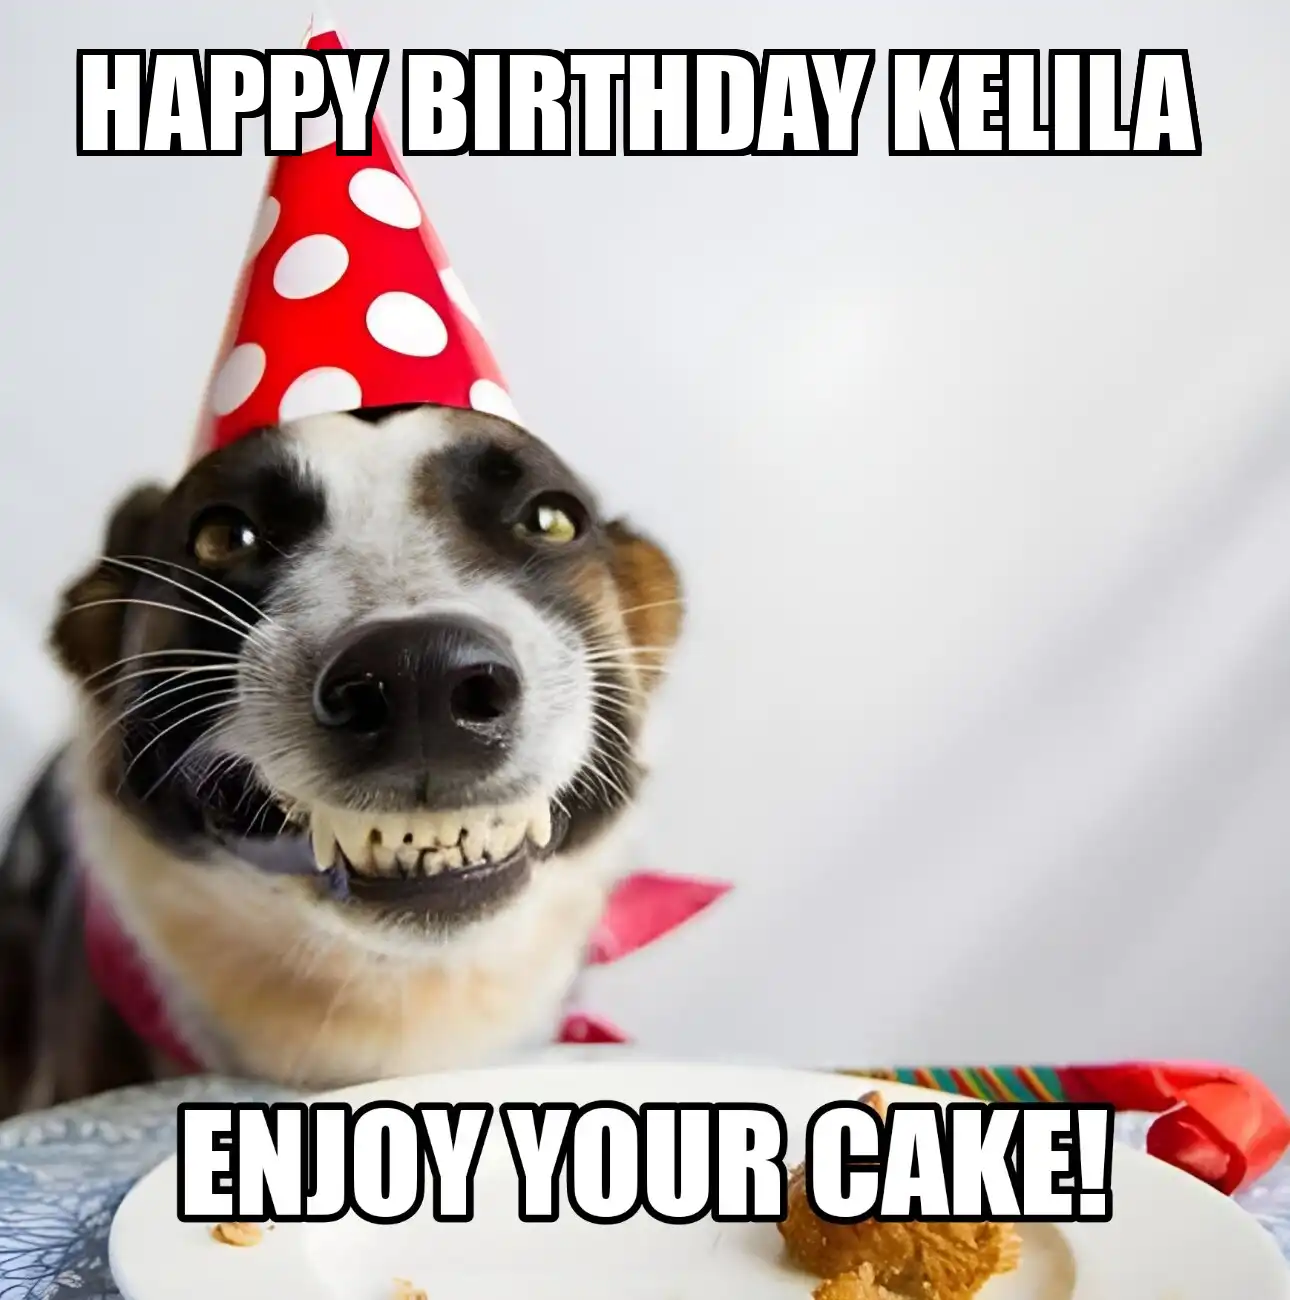 Happy Birthday Kelila Enjoy Your Cake Dog Meme